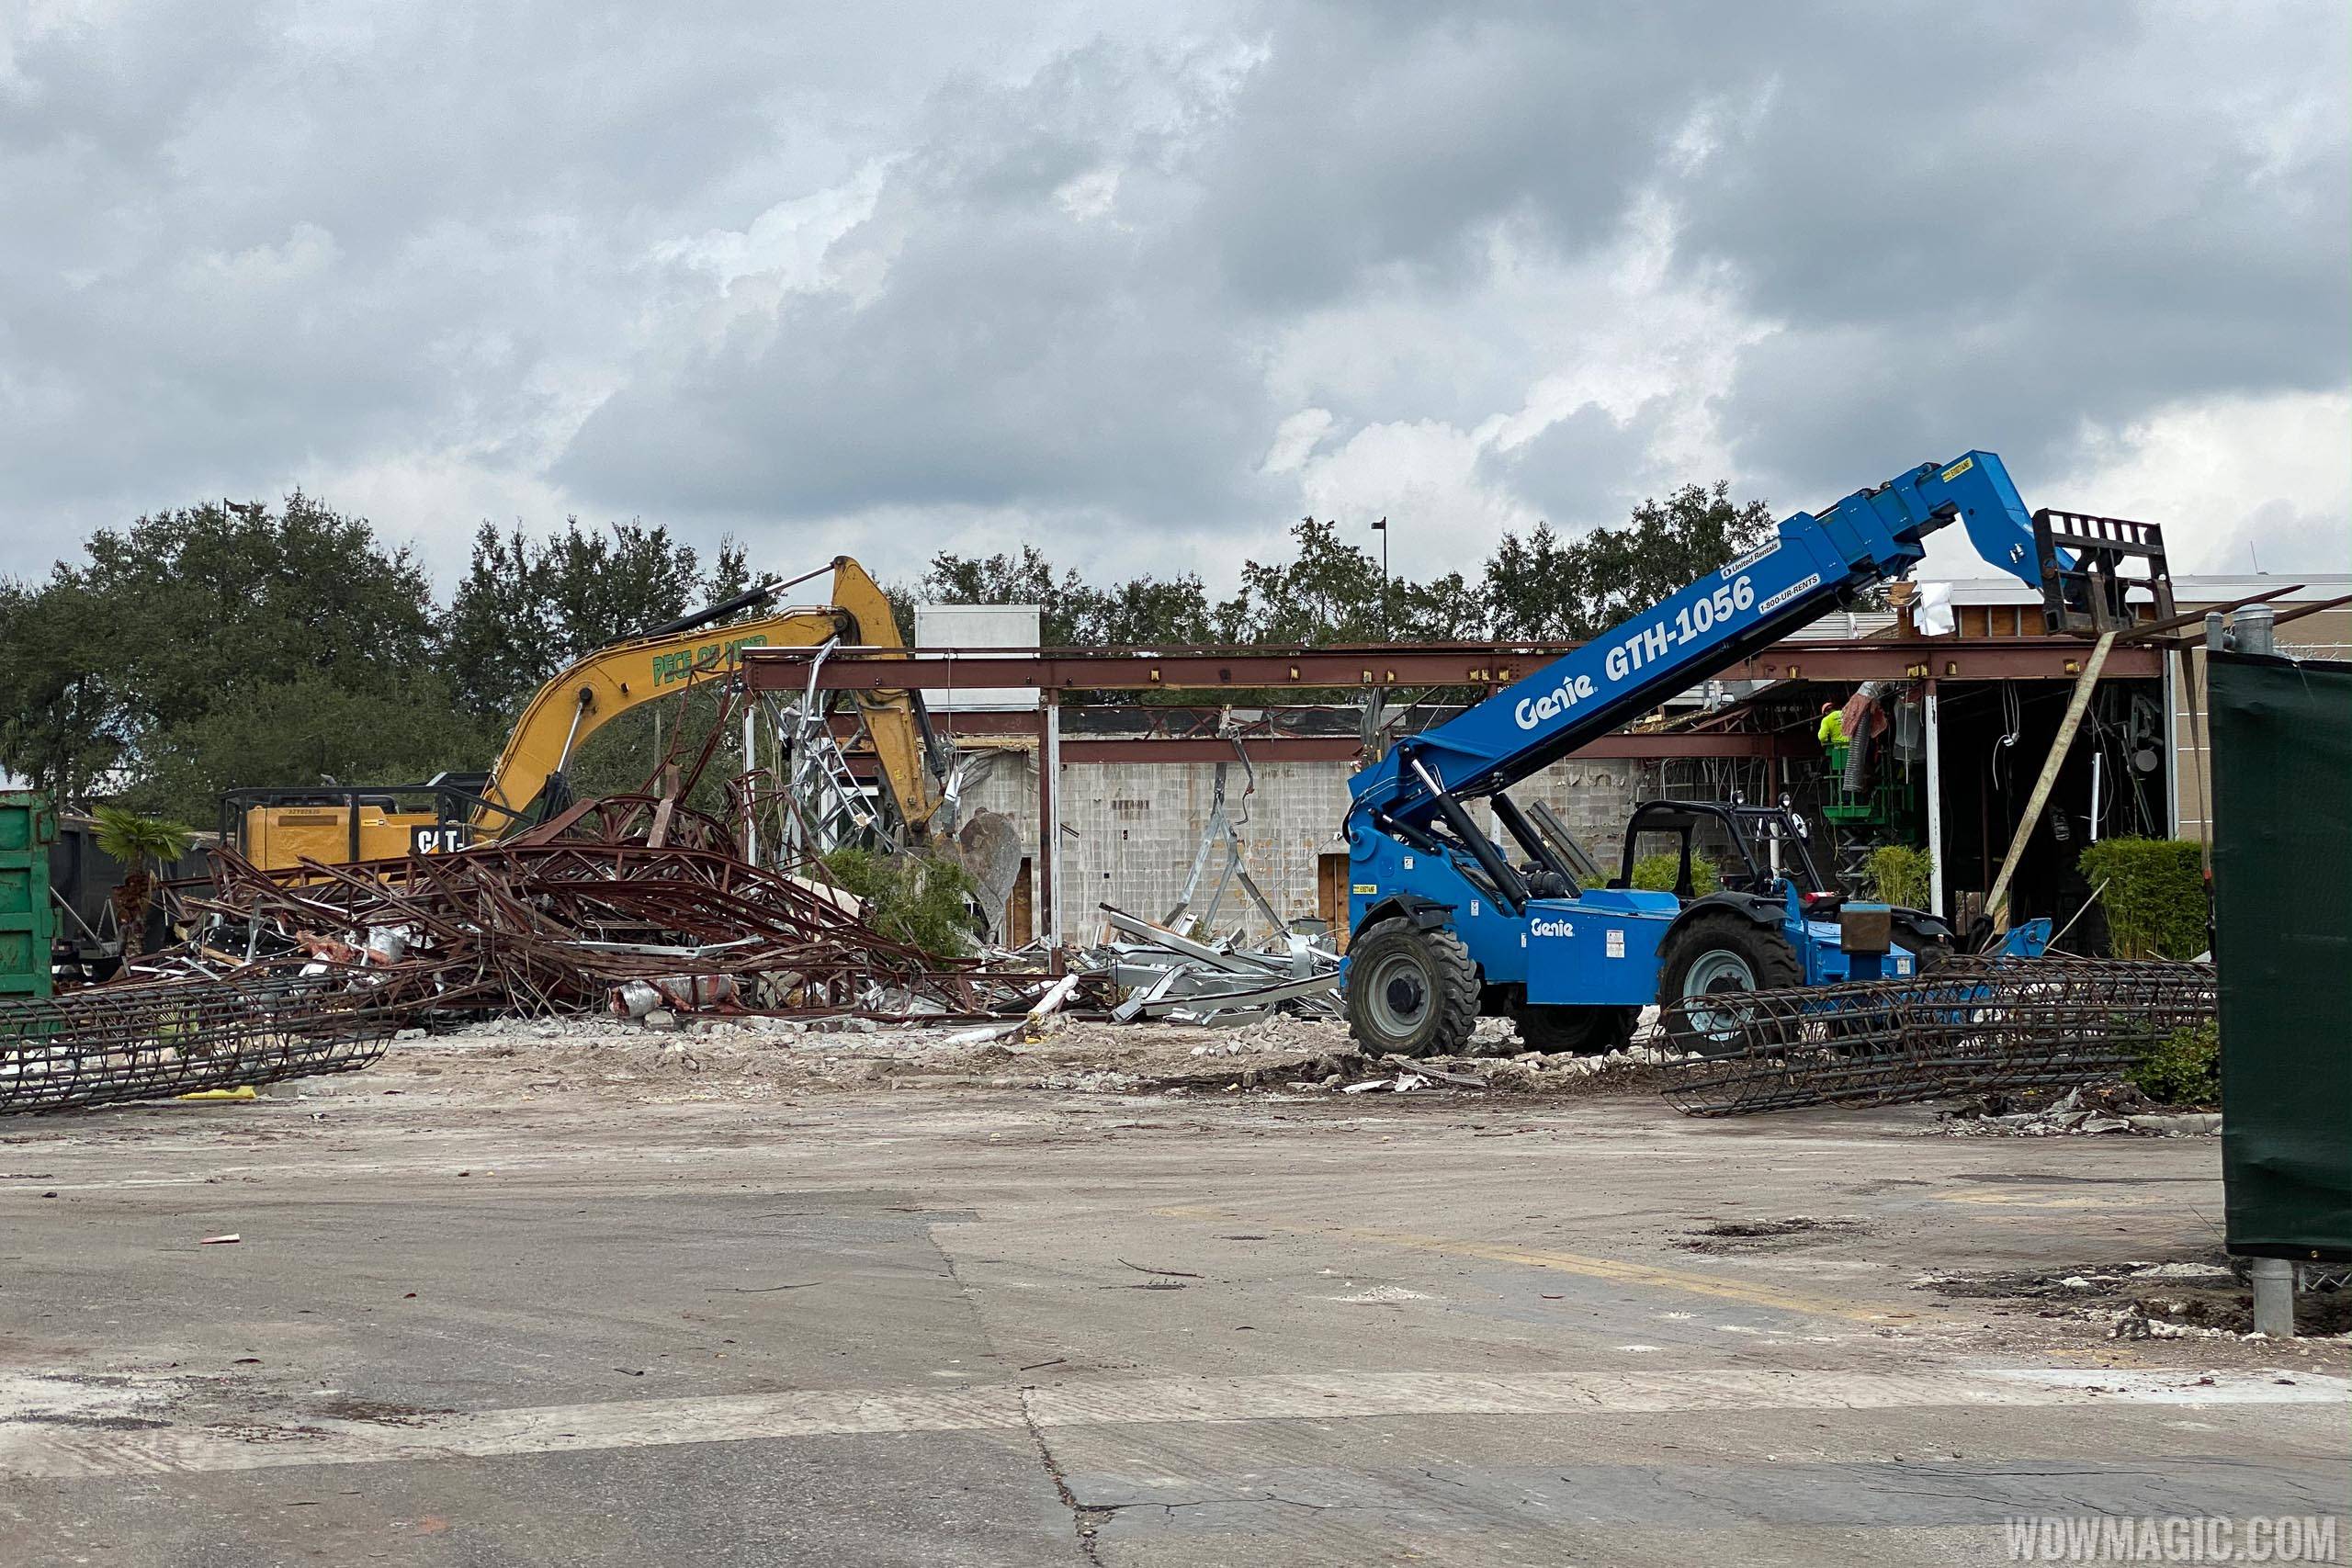 PHOTOS - McDonald's All Star Resort area nears total demolition